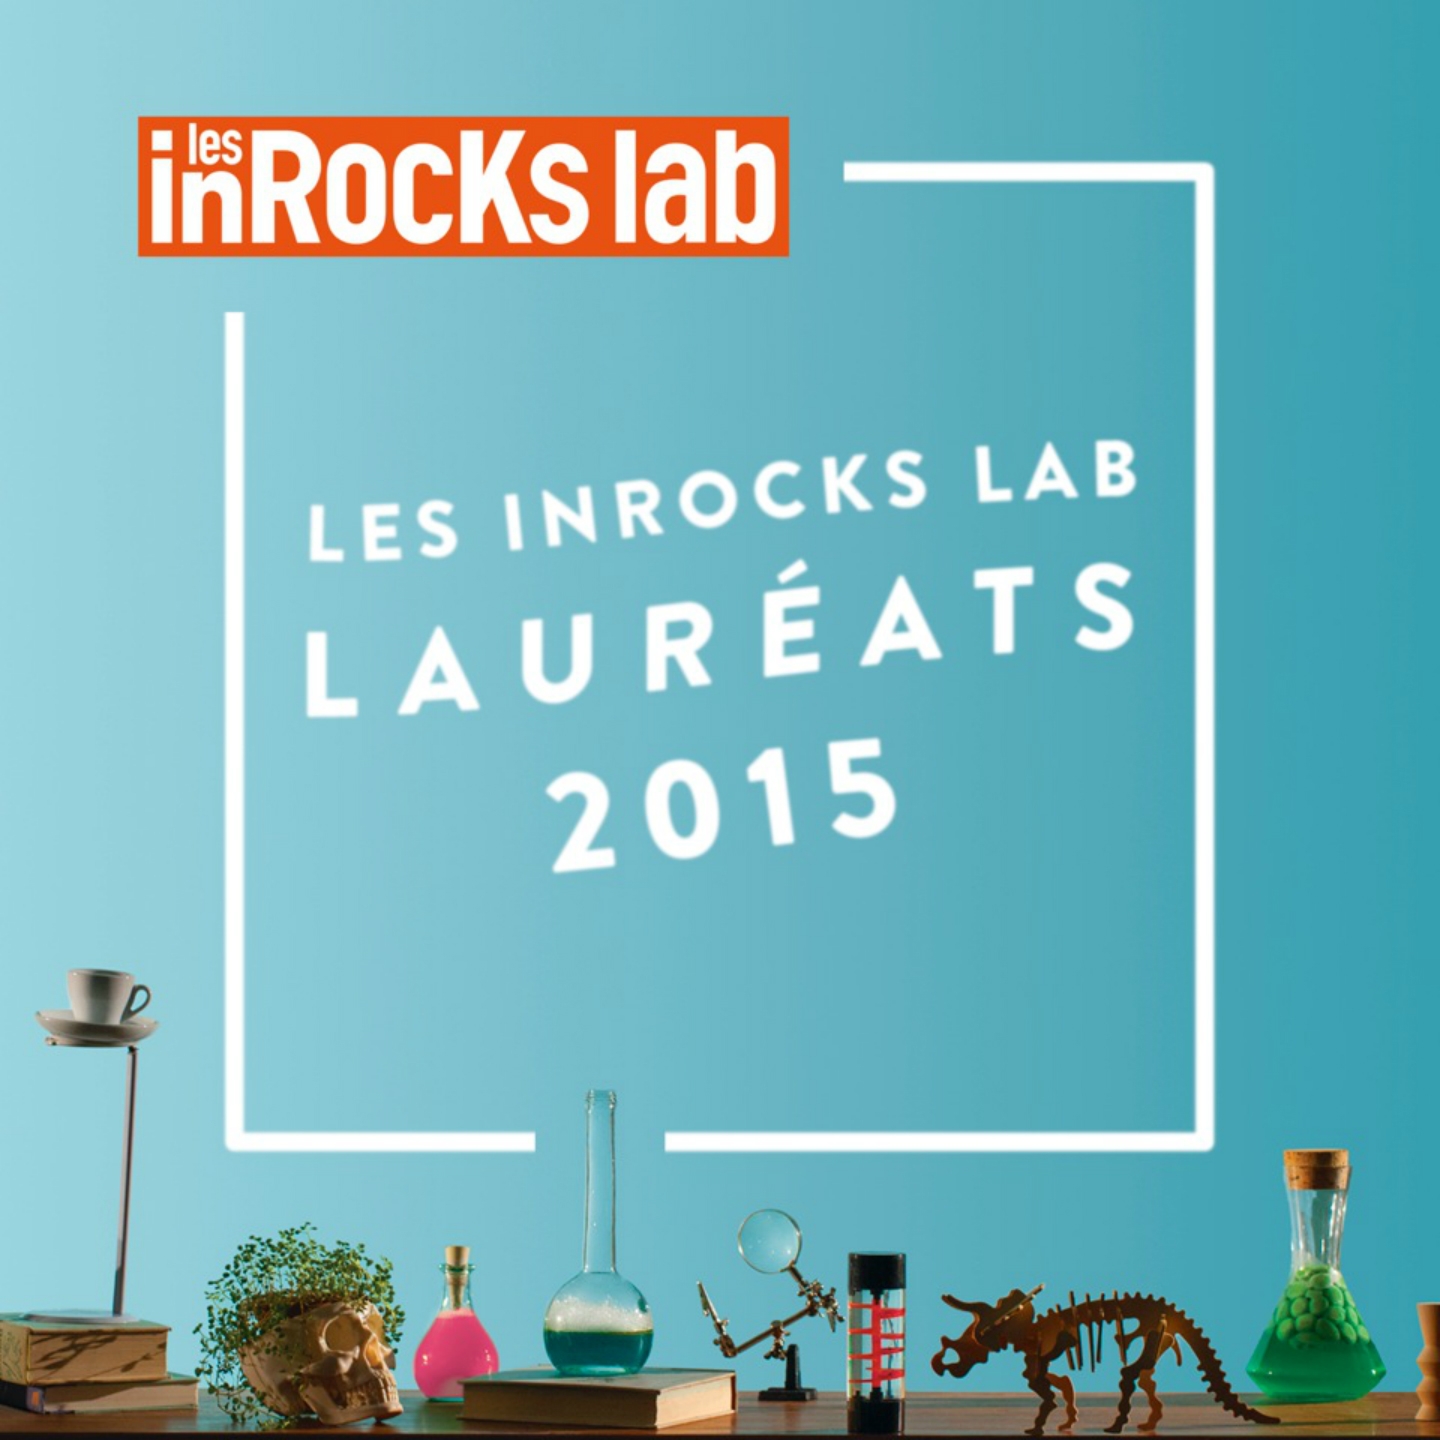 Les inRocKs Lab : laure ats 2015